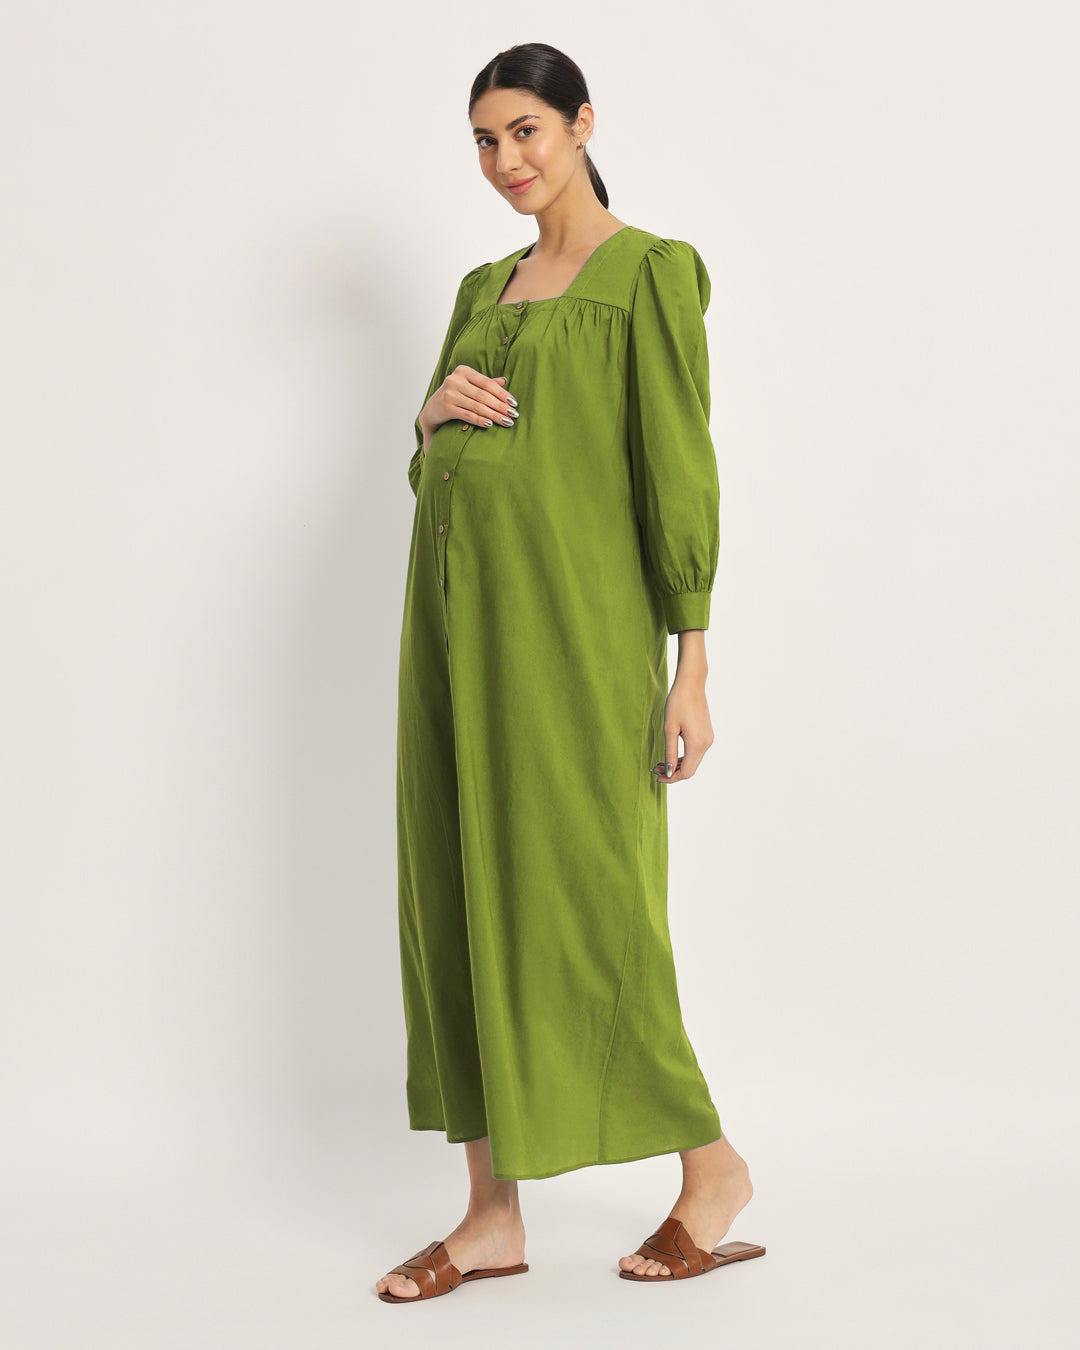 Combo: Iris Pink & Sage Green Belly Blossom Maternity & Nursing Dress-Set of 2